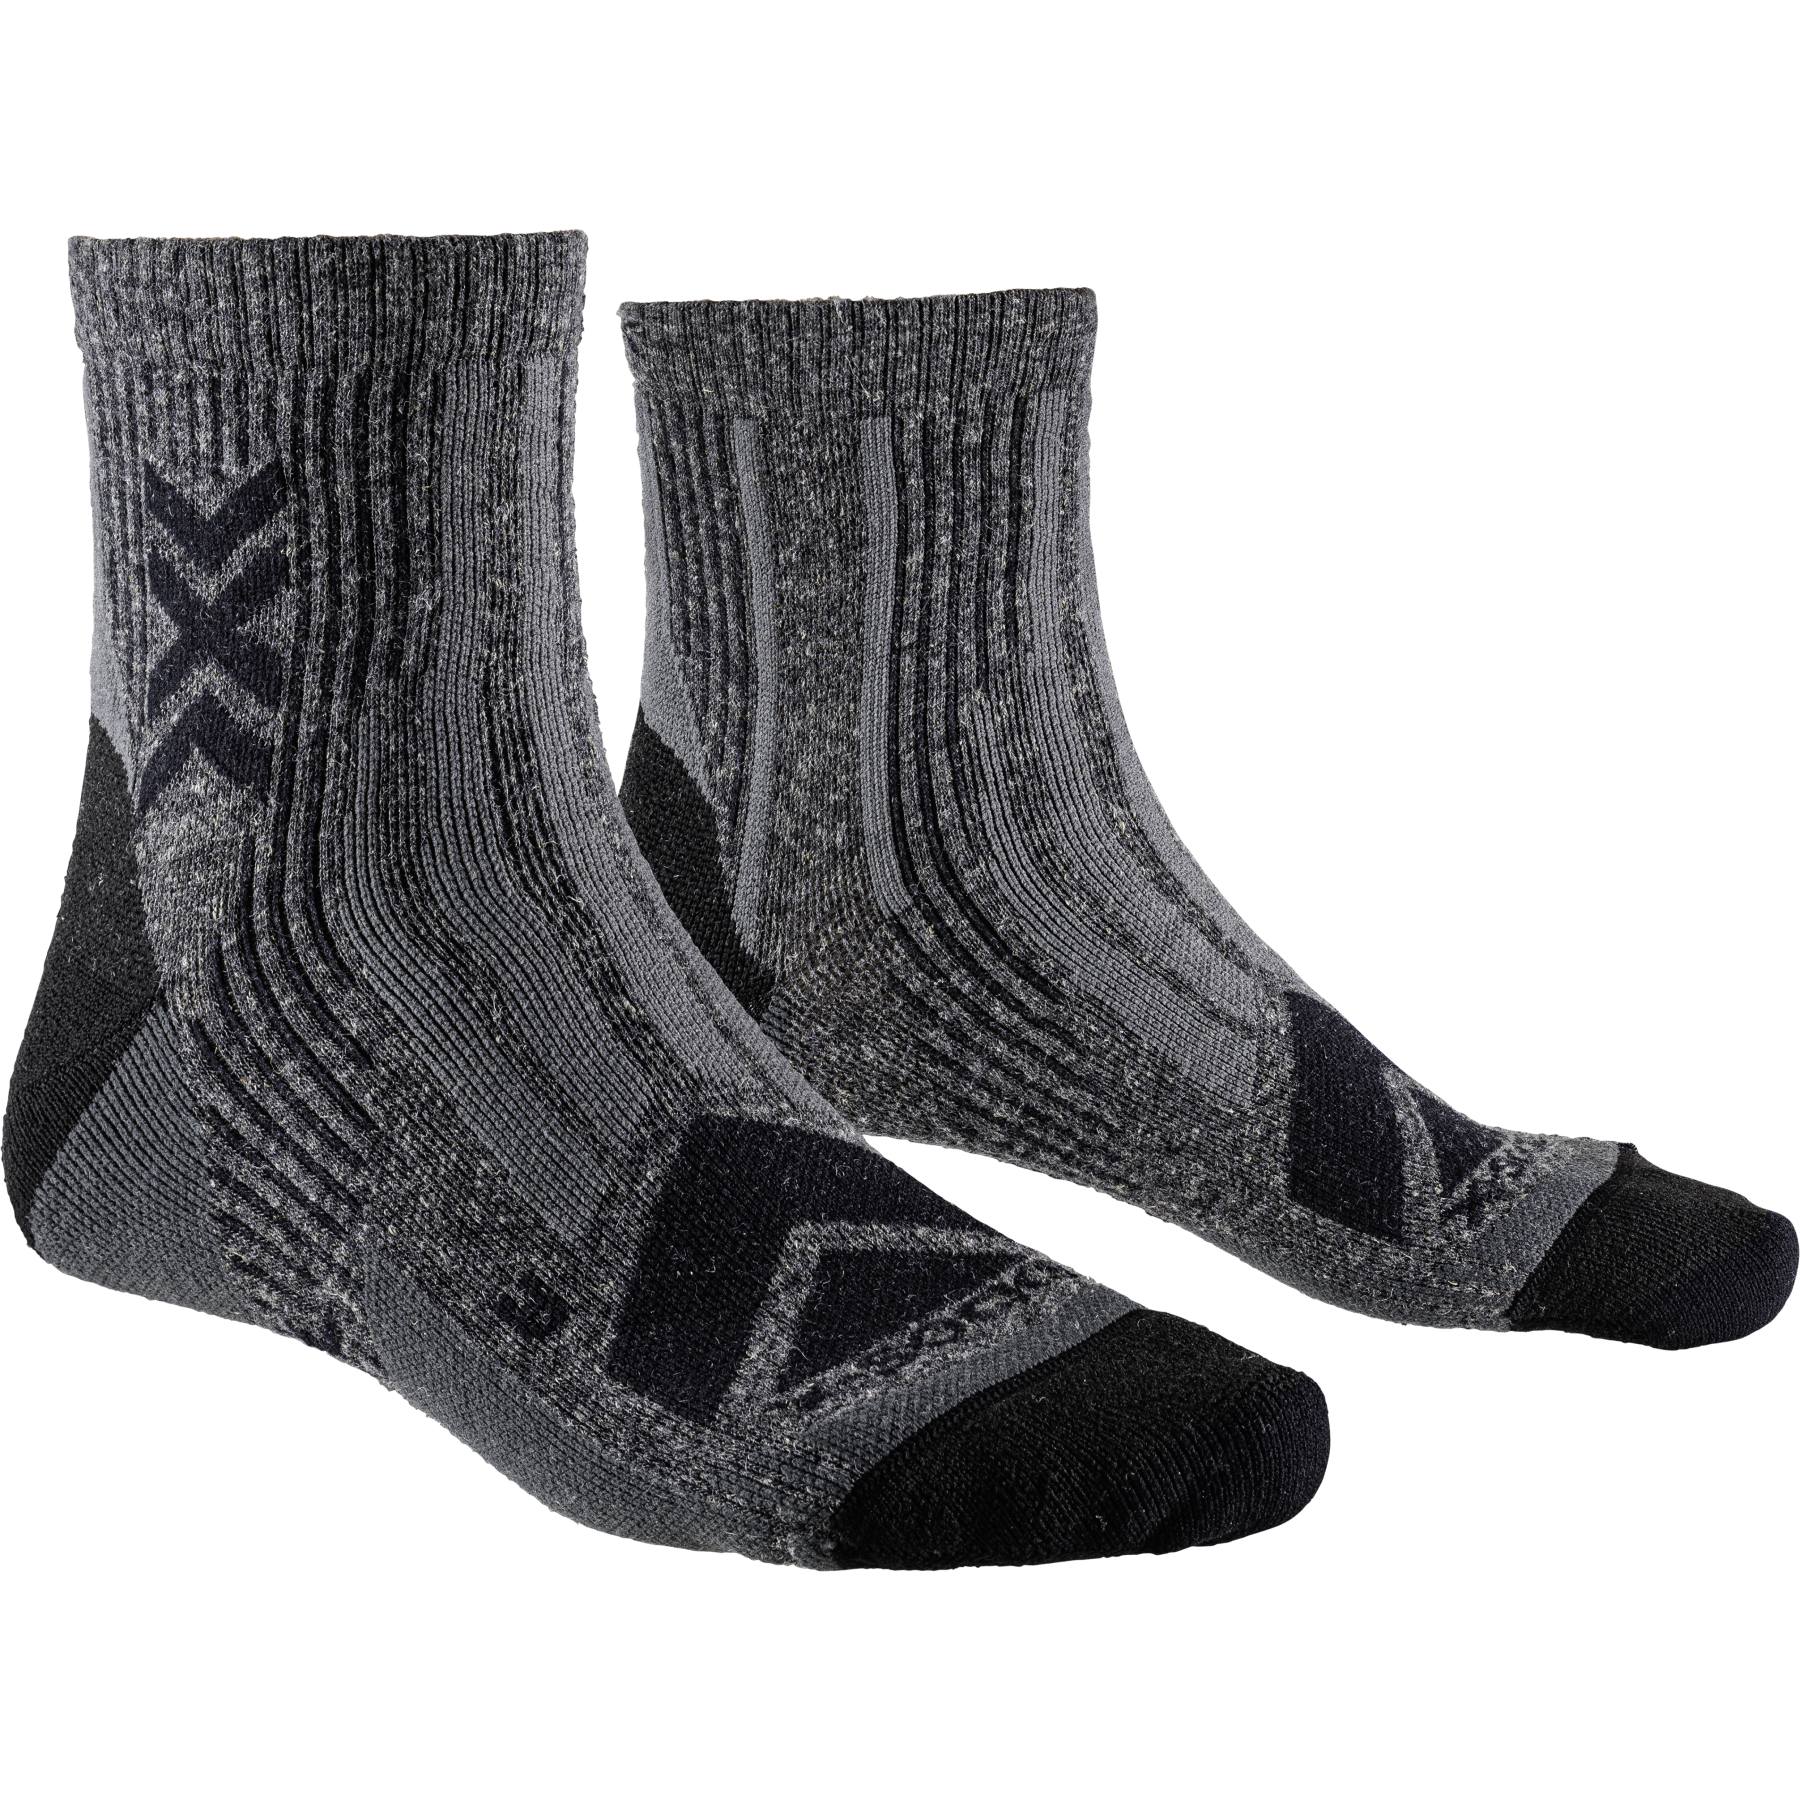 Produktbild von X-Socks Hike Perform Merino Ankle Socks - black/charcoal